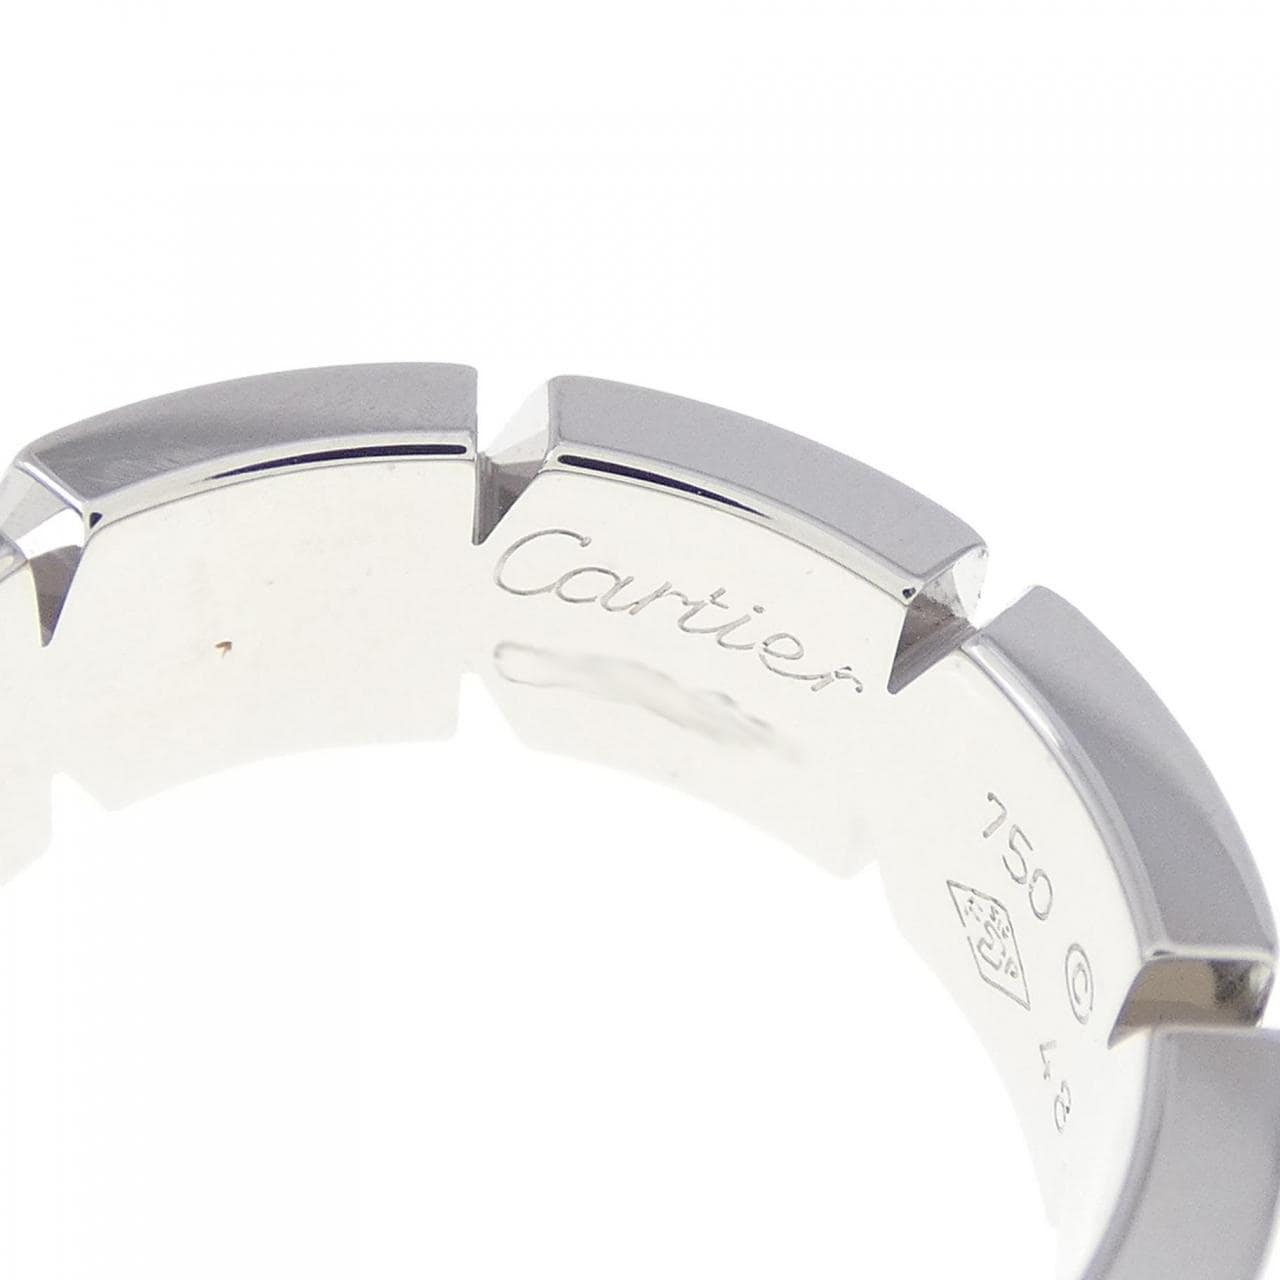 Cartier Tank Française half diamond Ring